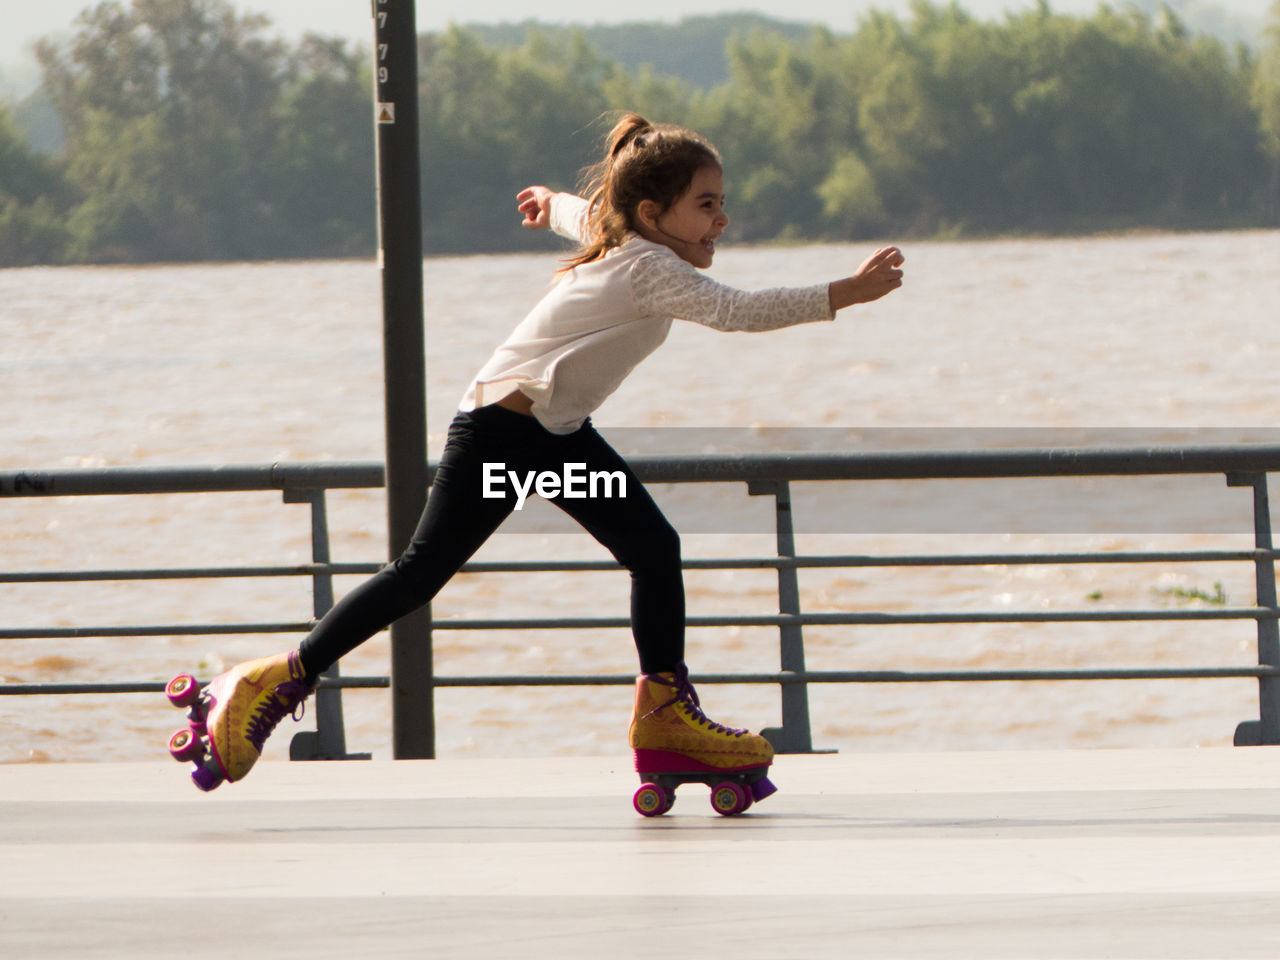 Girl roller skating on footpath against lake